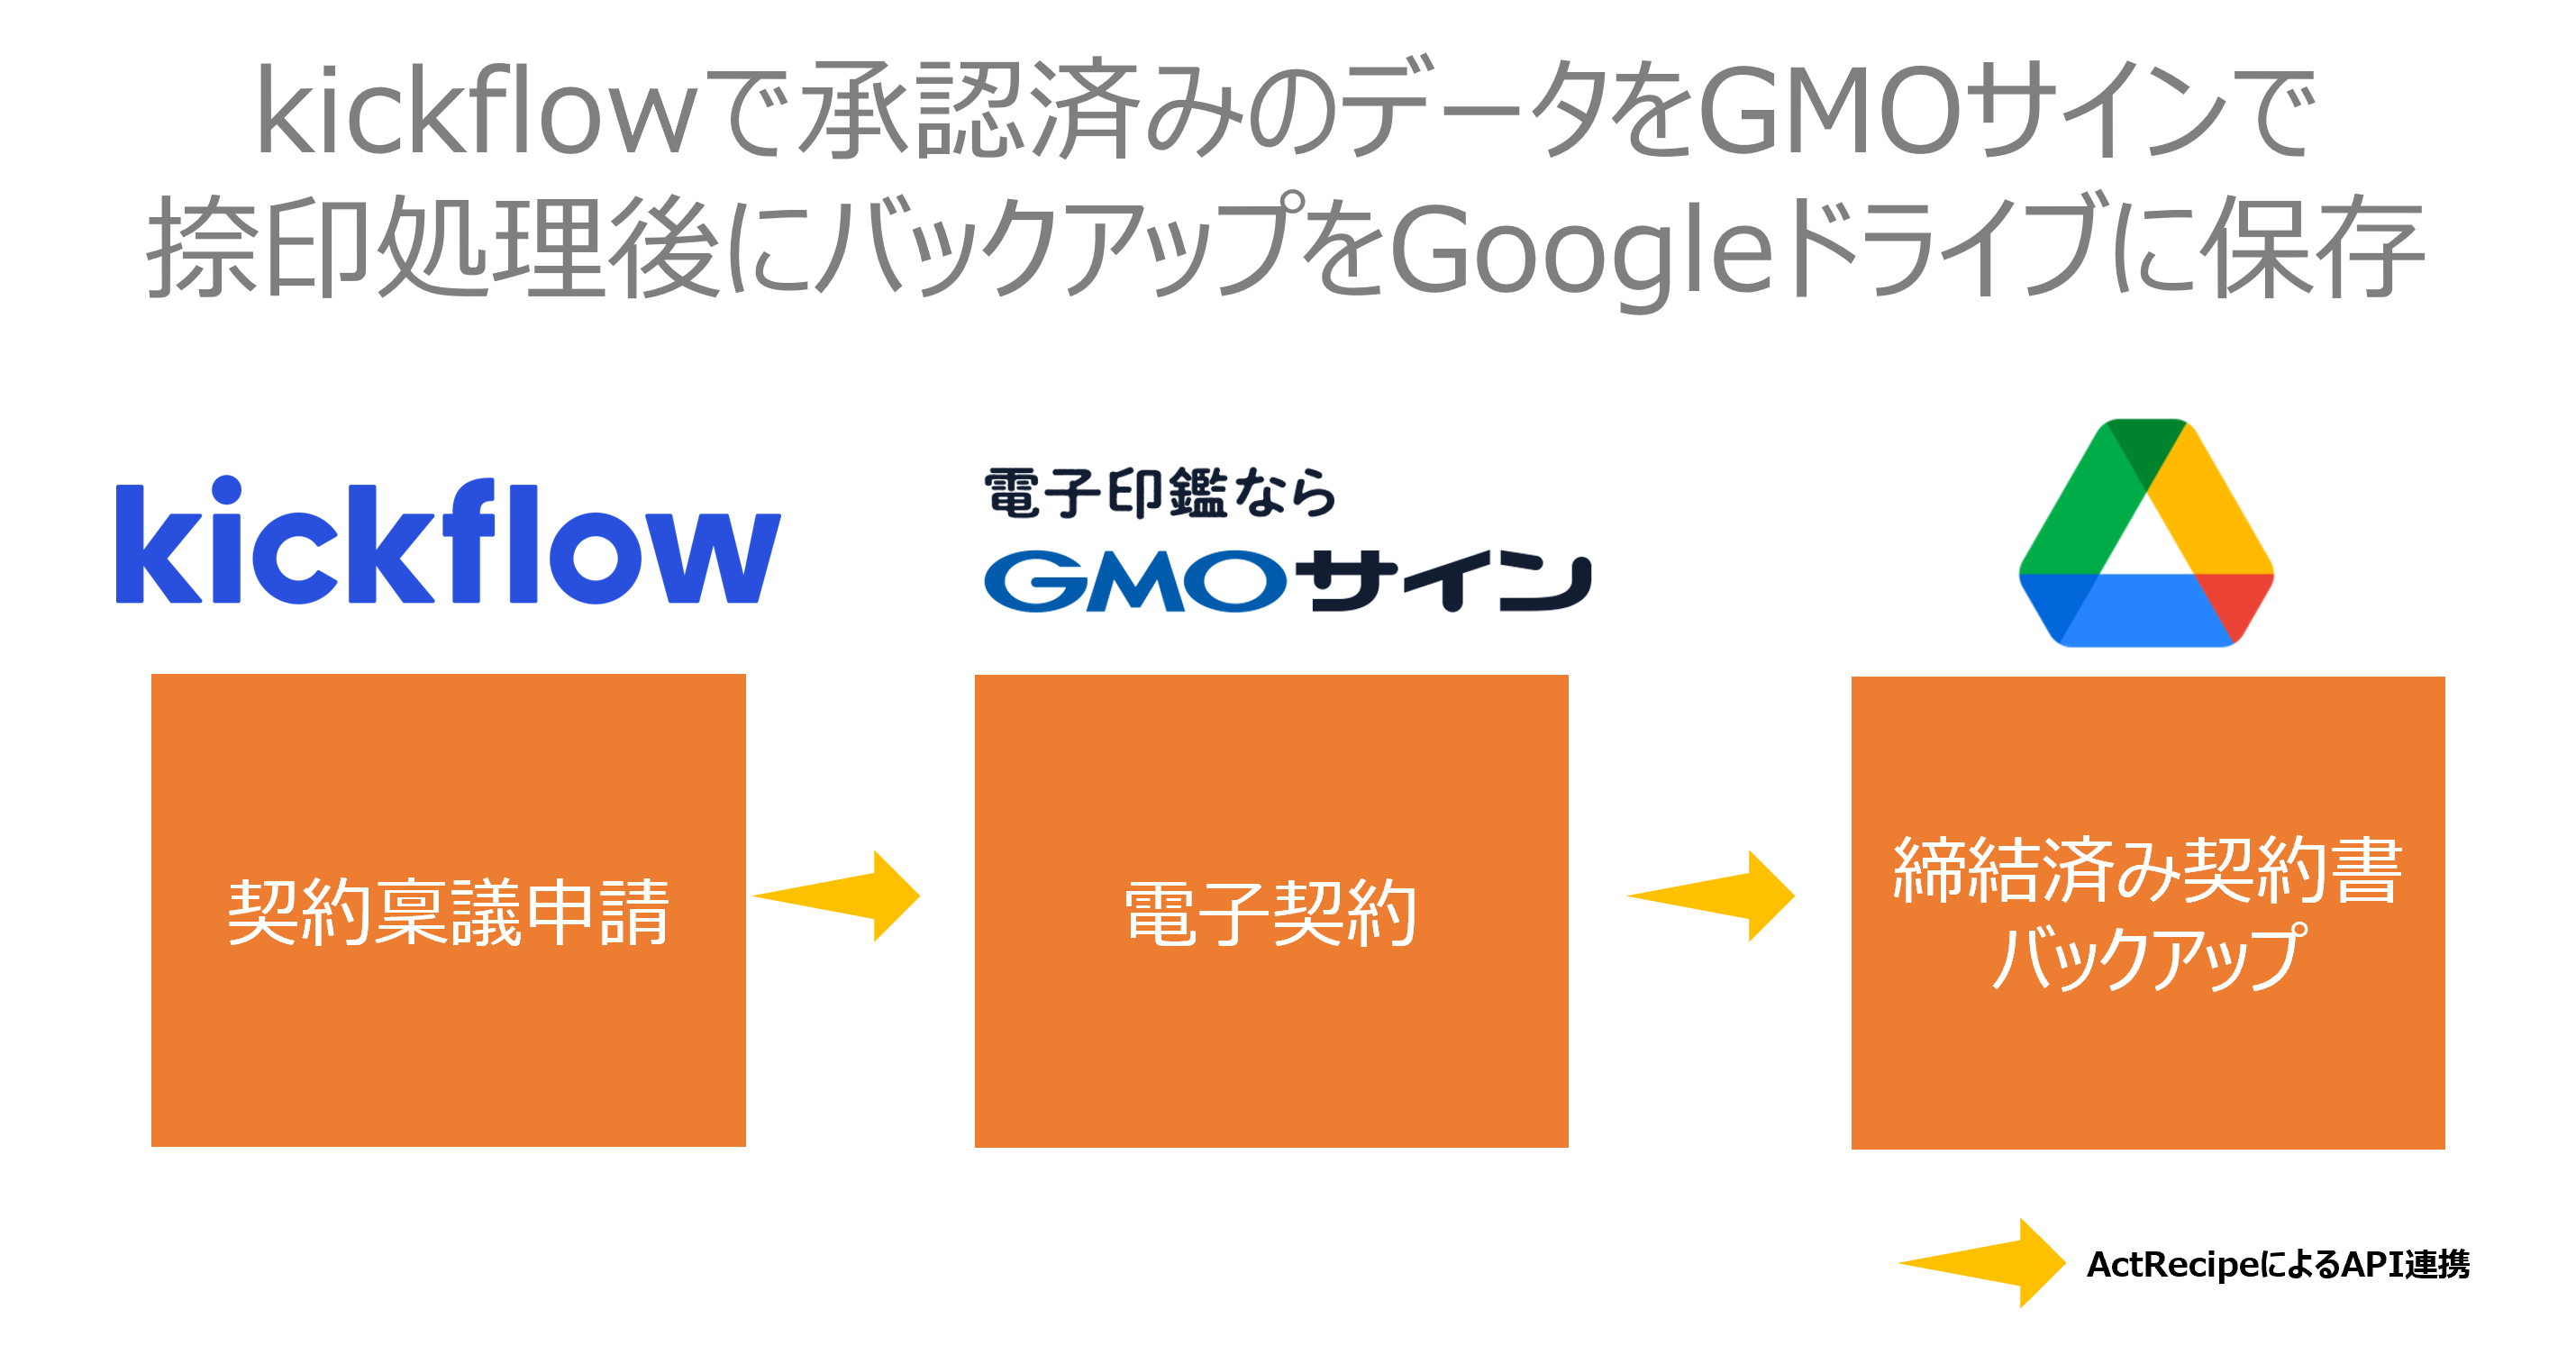 kickflow__________GMO_________________Google_______.png